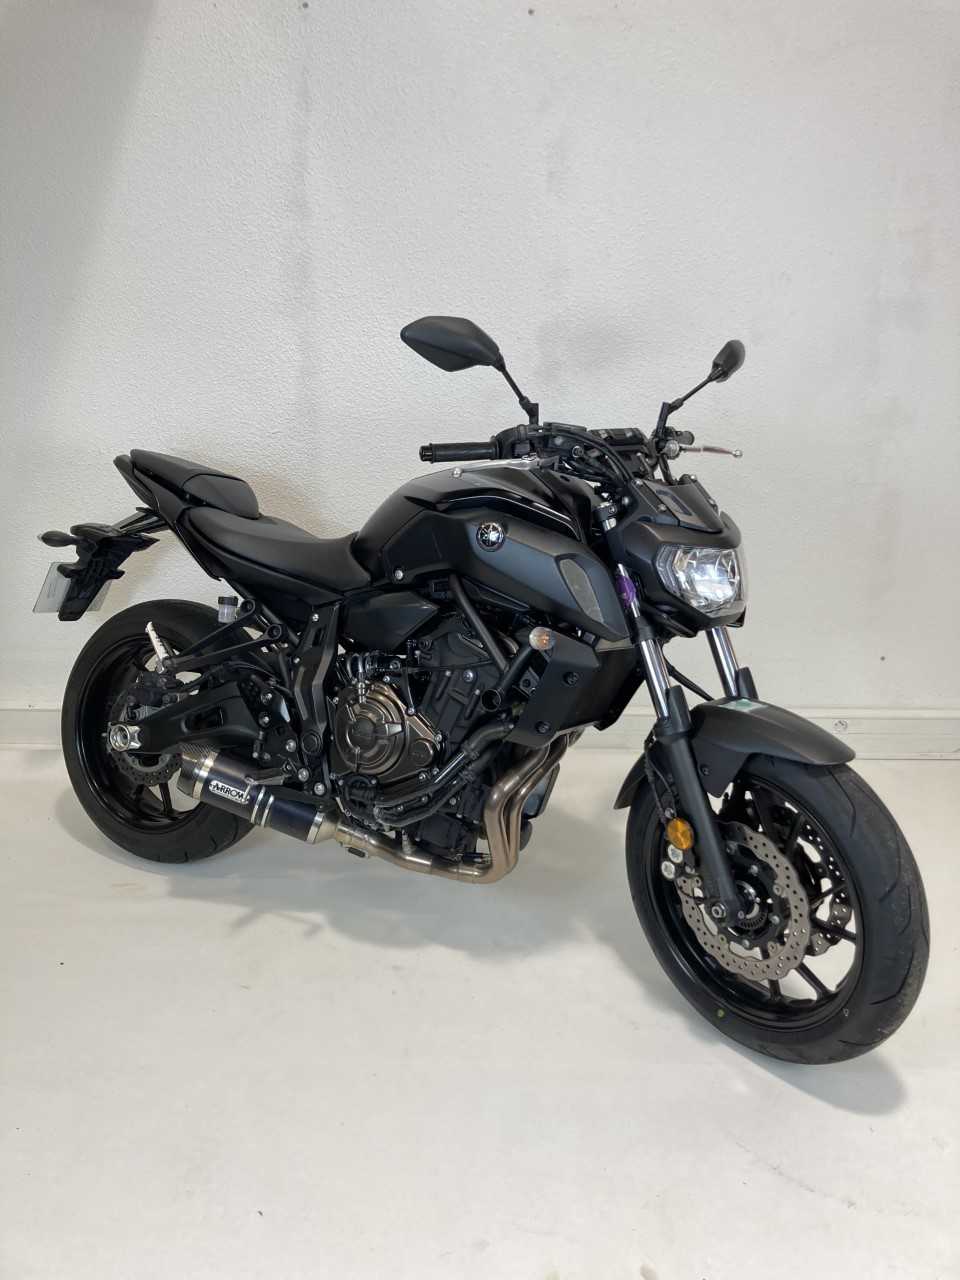 Yamaha MT-07   ABS (35KW) 2019 vue 3/4 droite